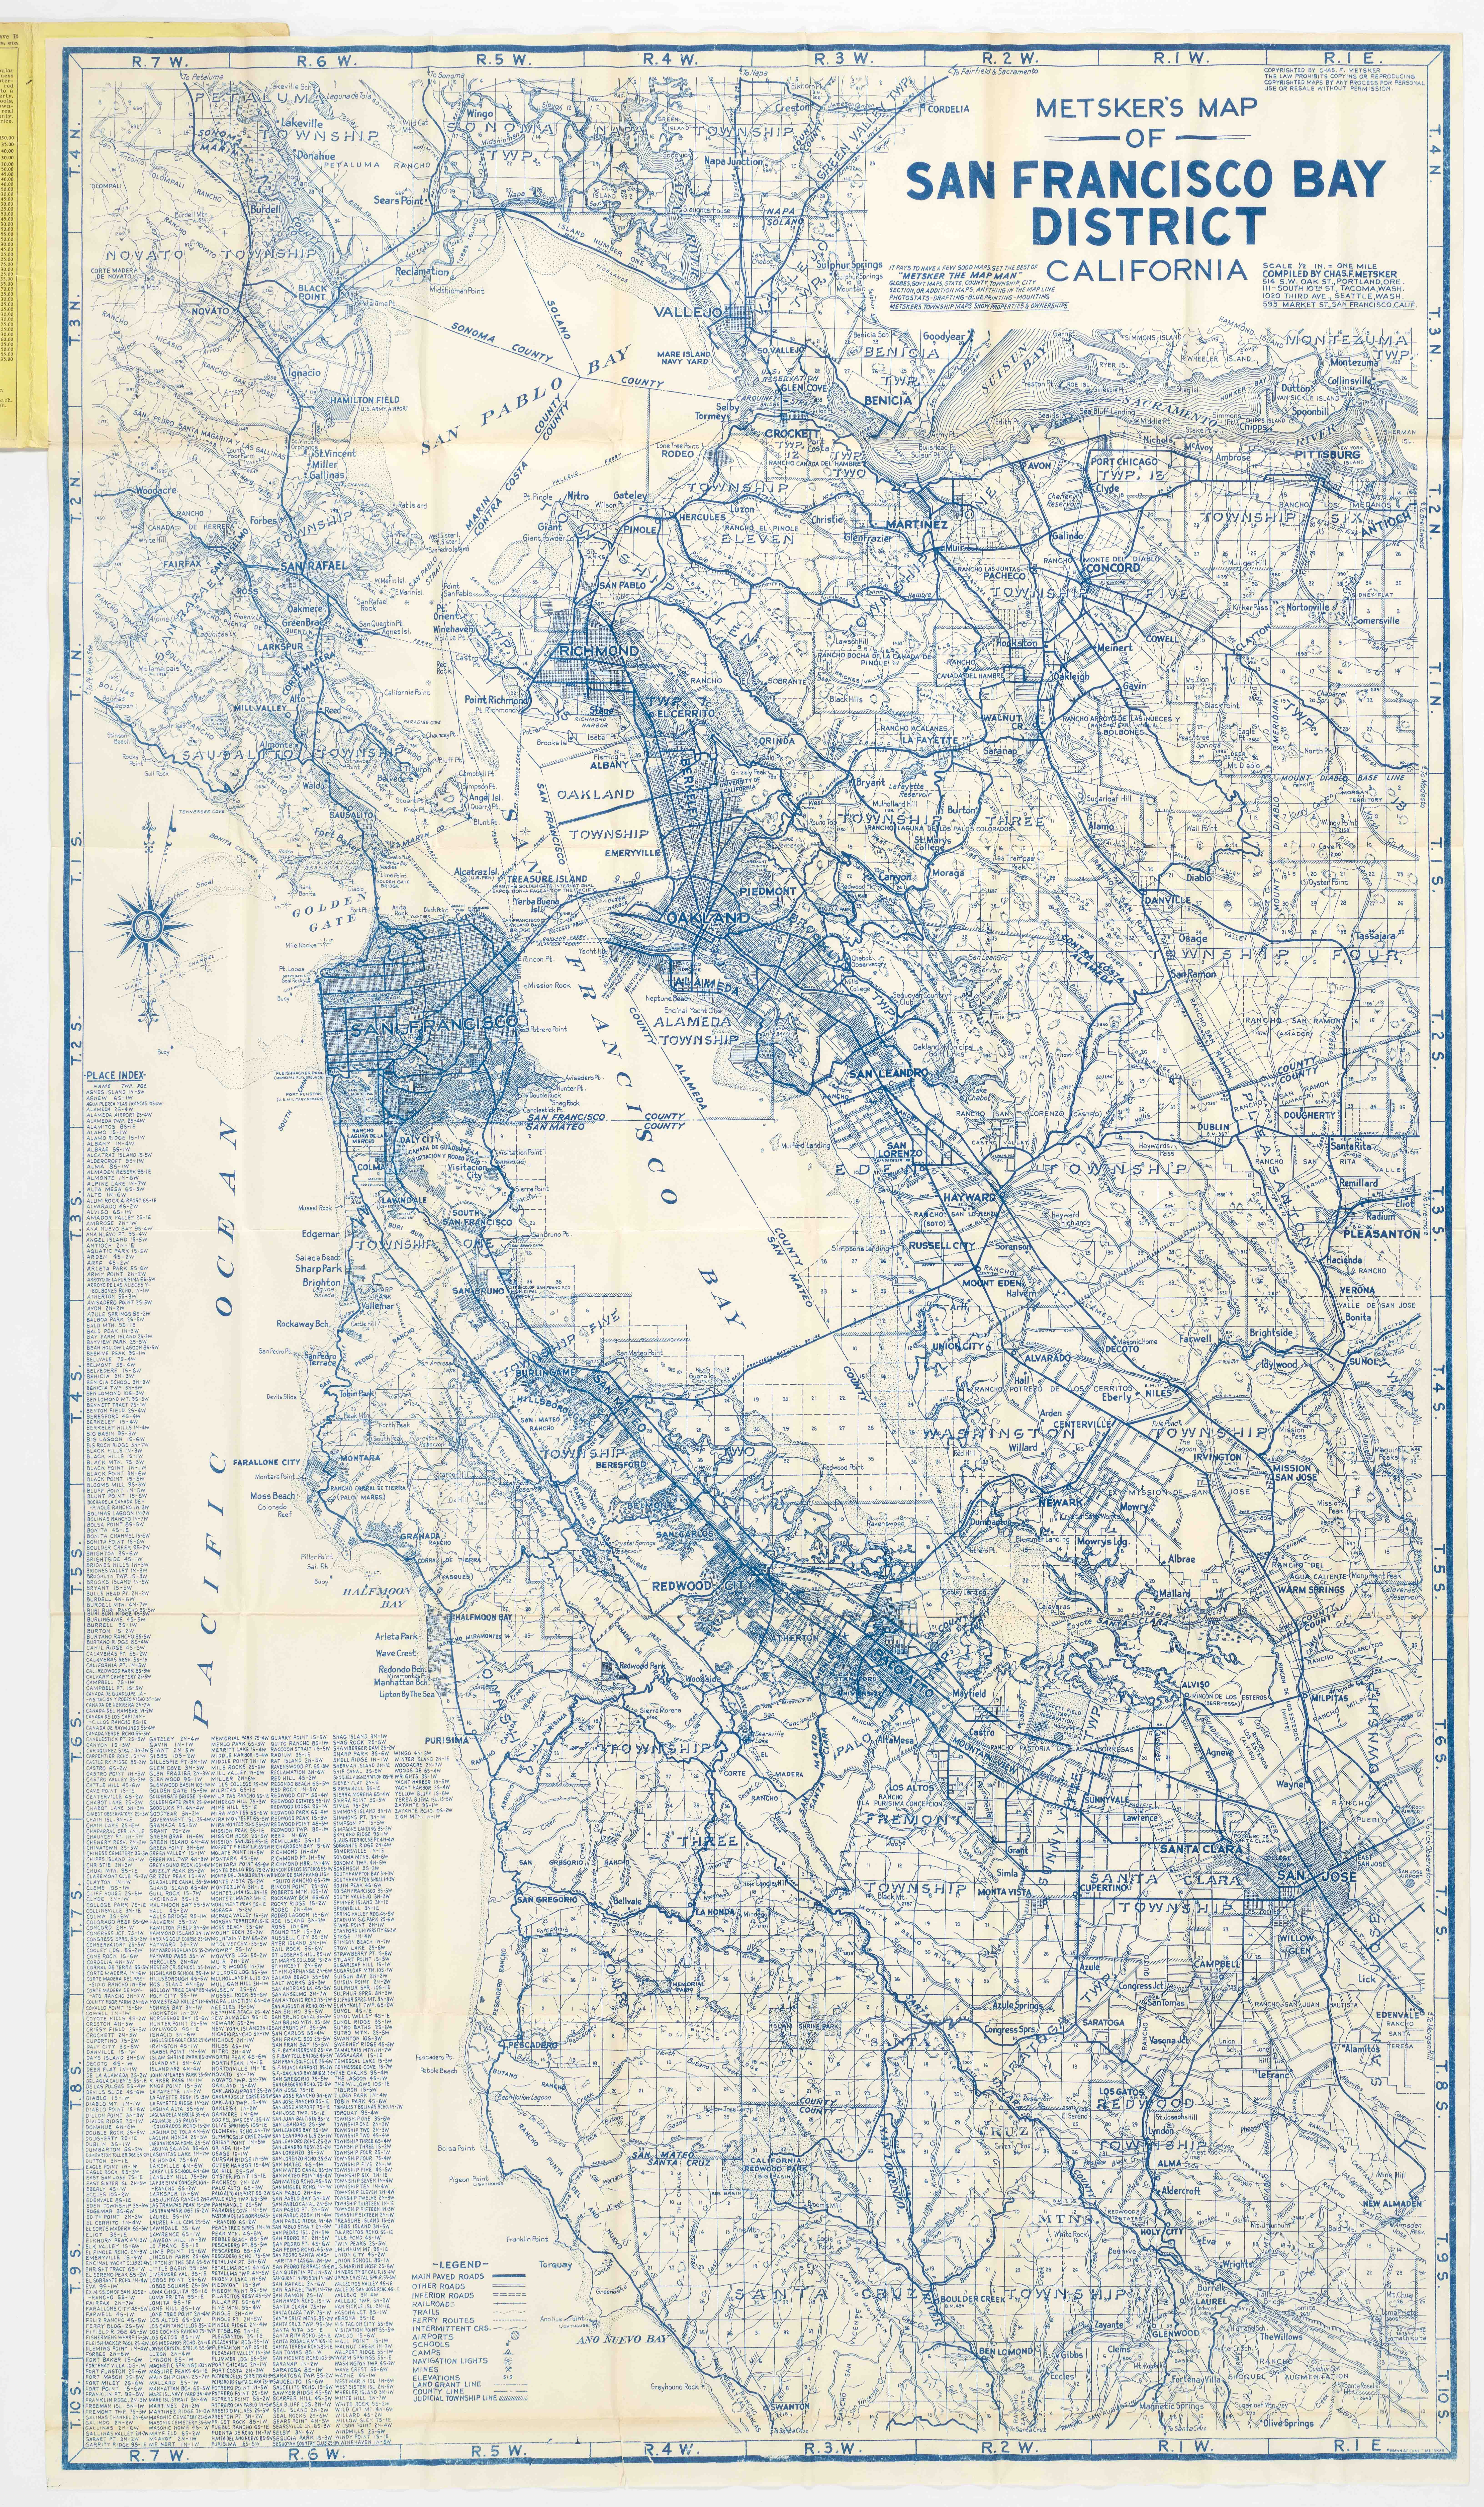 Metsker’s Map of San Francisco Bay District California